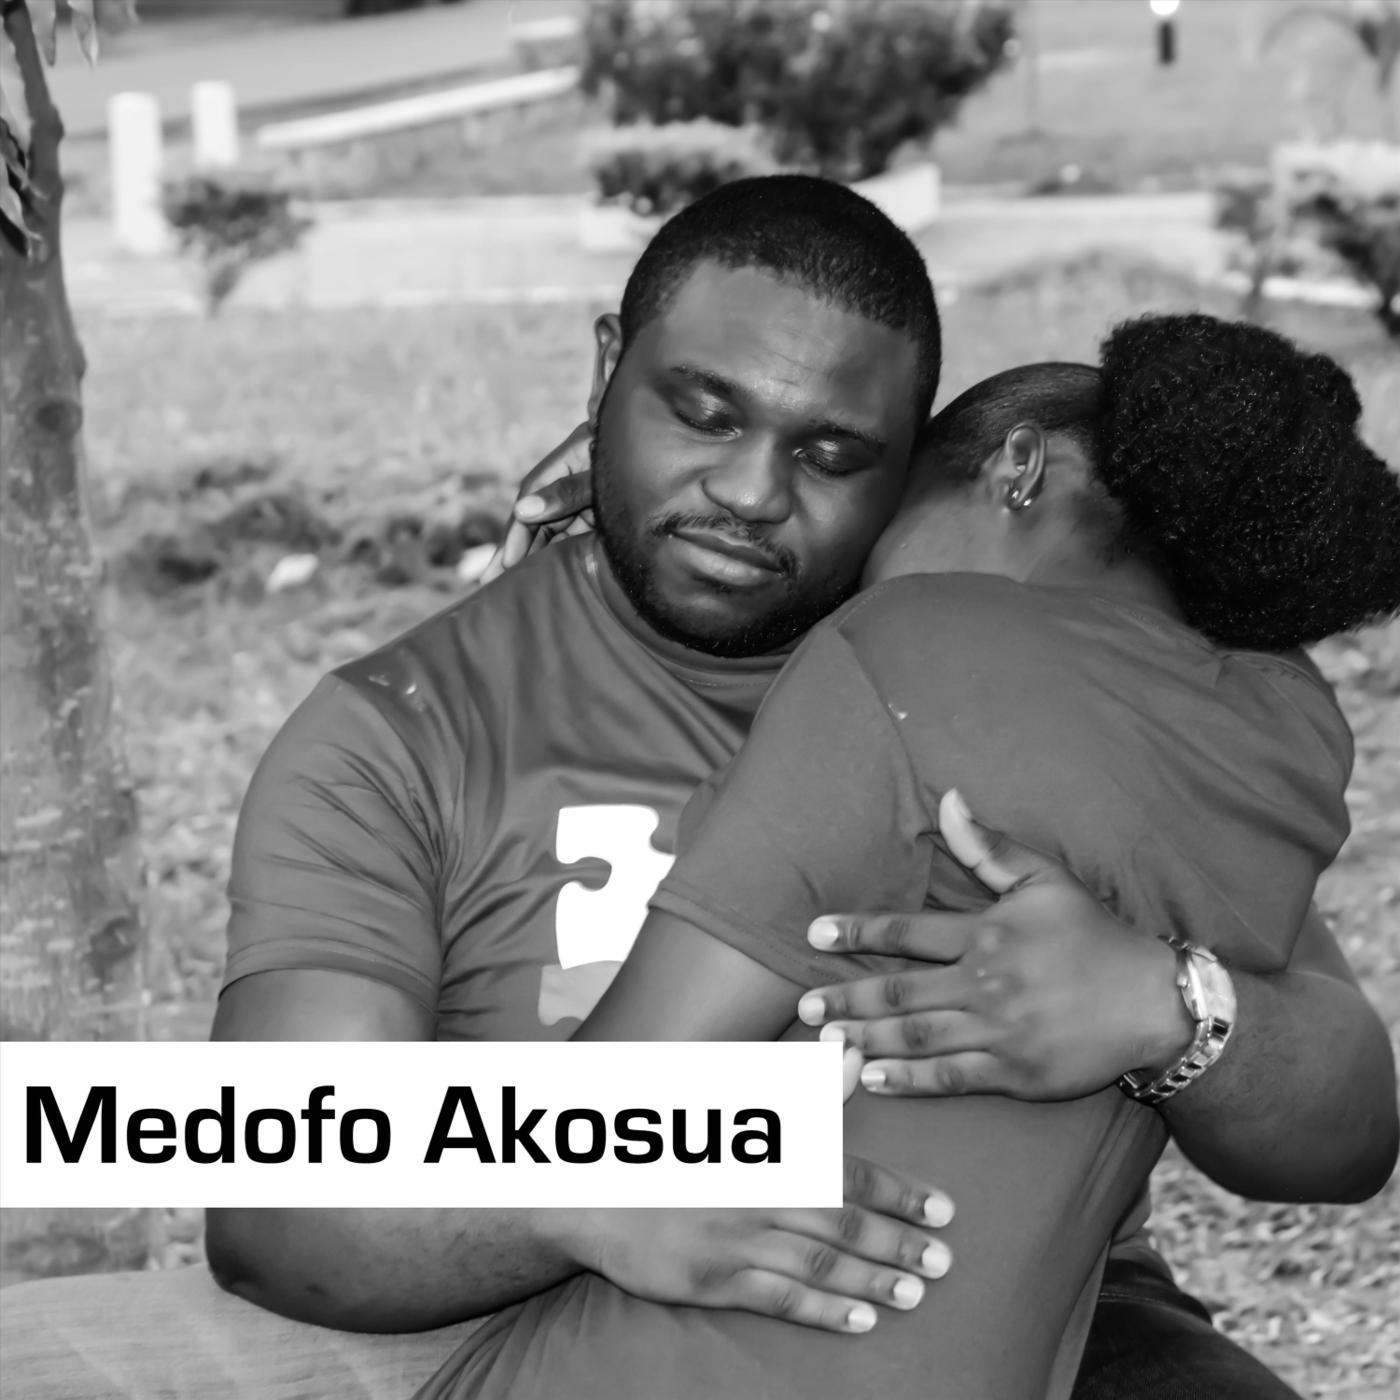 Medofo Akosua